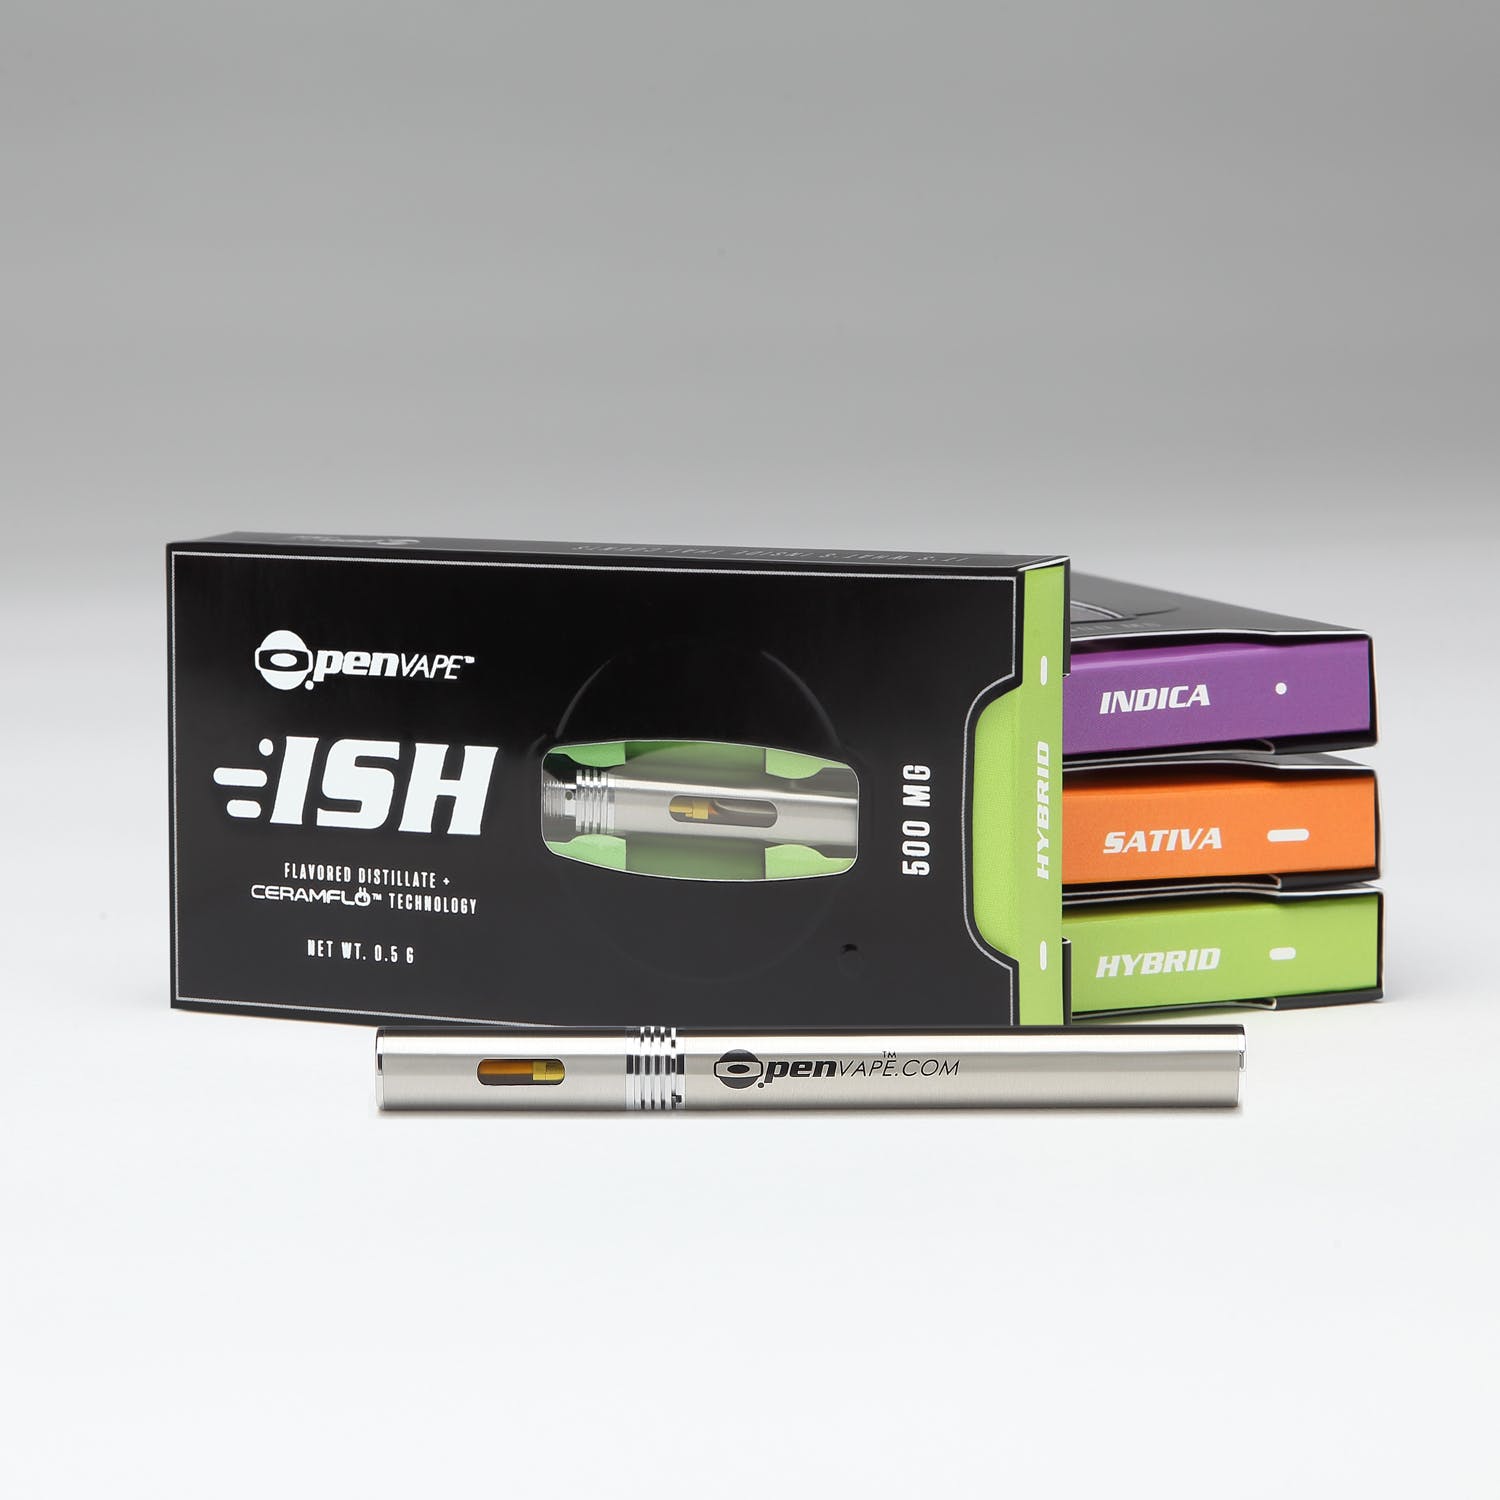 Cartridge - 500 mg Open ISH (Hybrid)